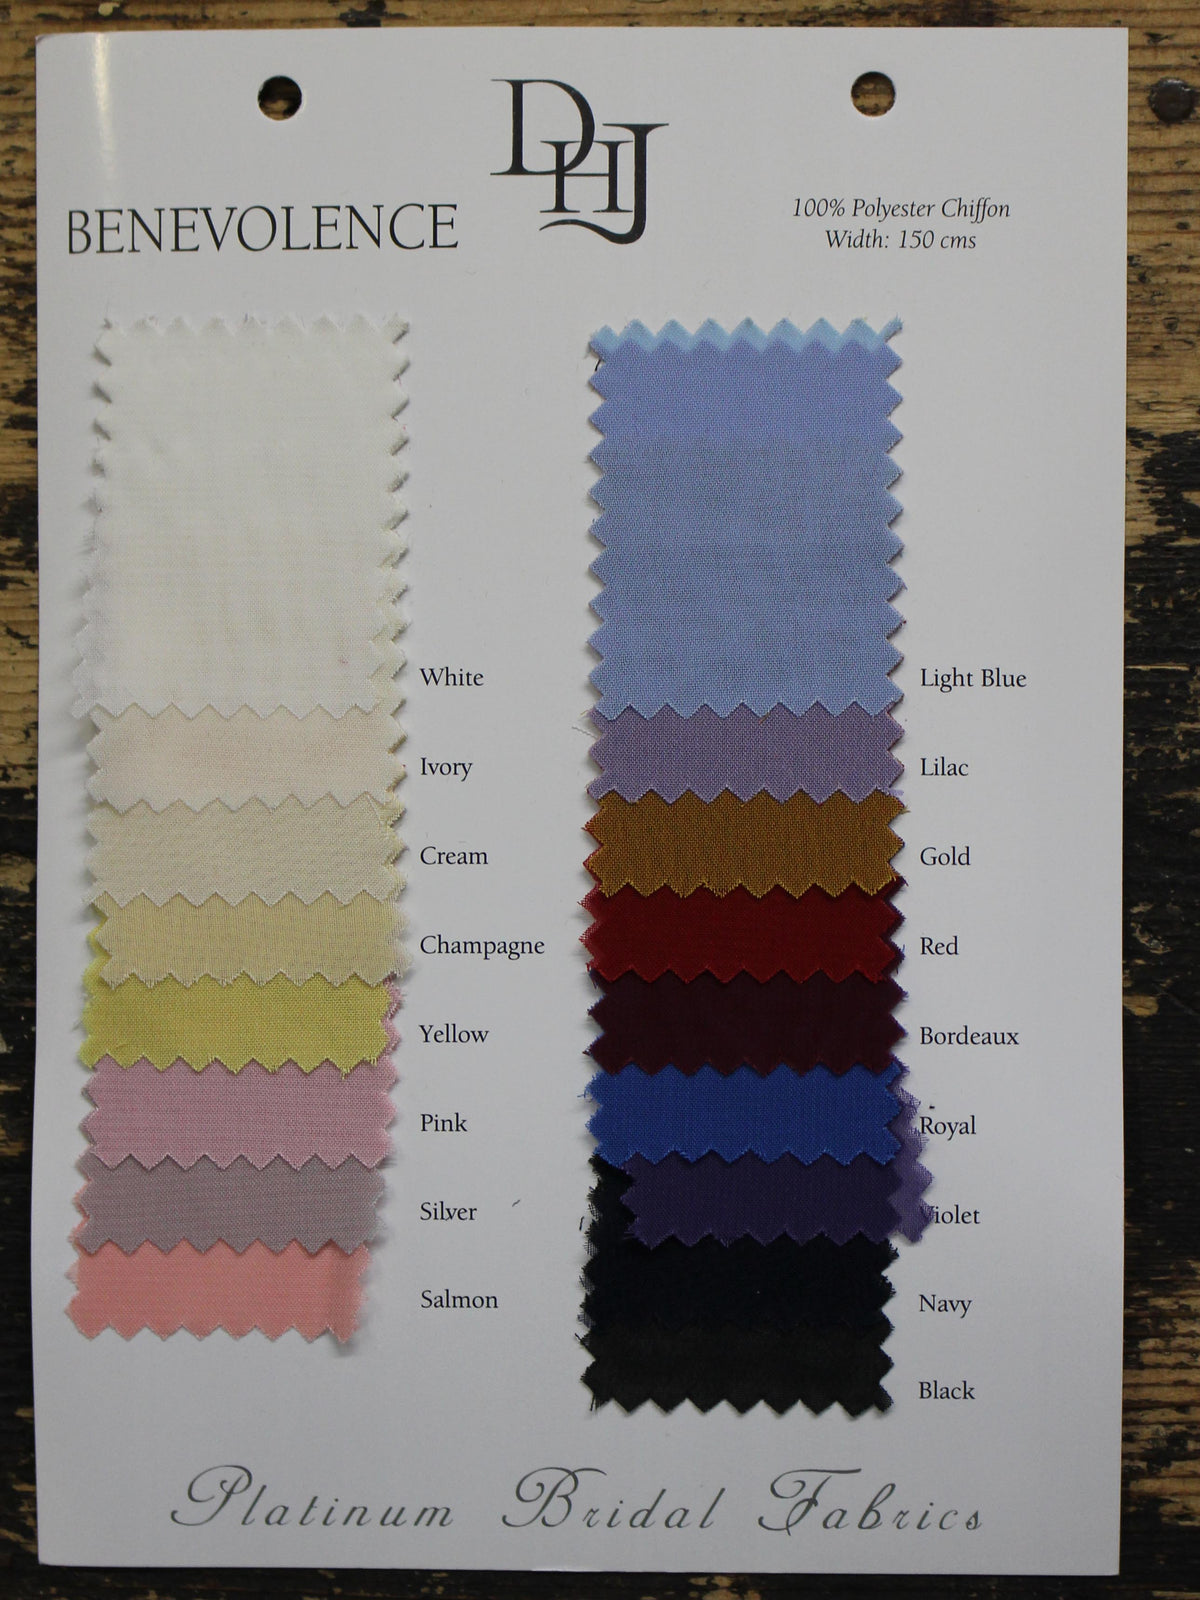 Sample Card of Polyester Chiffon - Benevolence